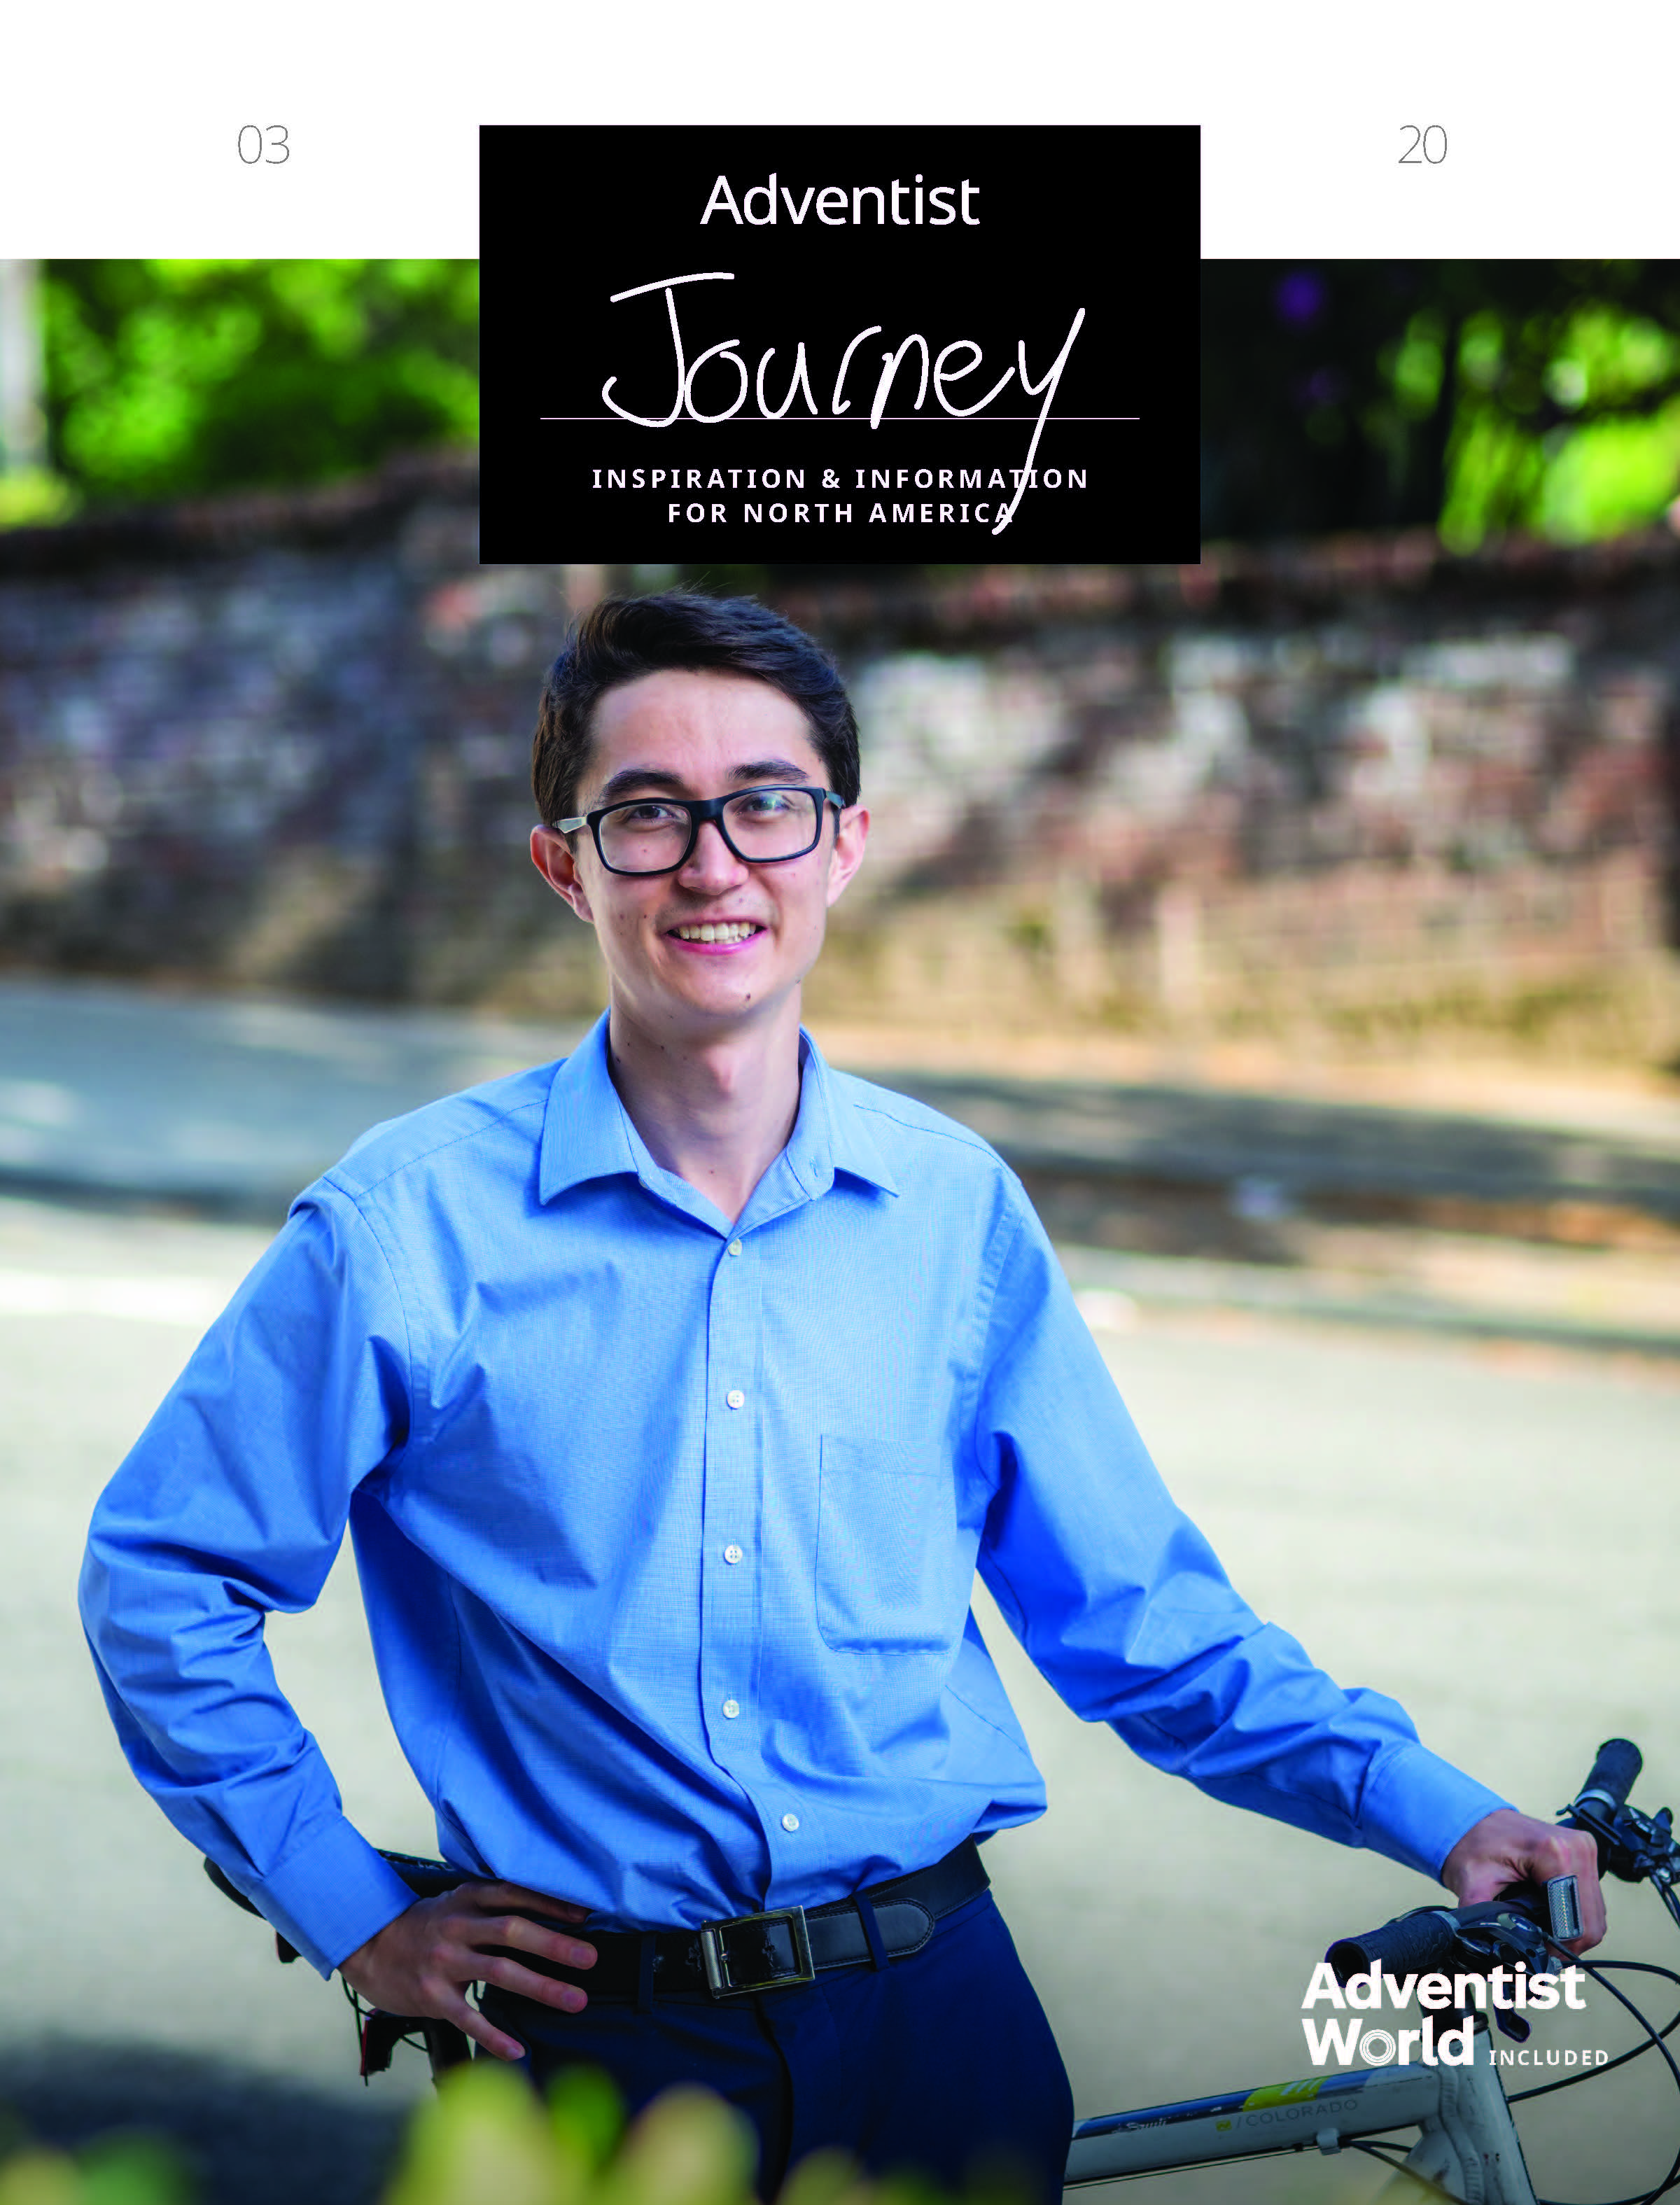 March Adventist Journey cover - John Van Patten